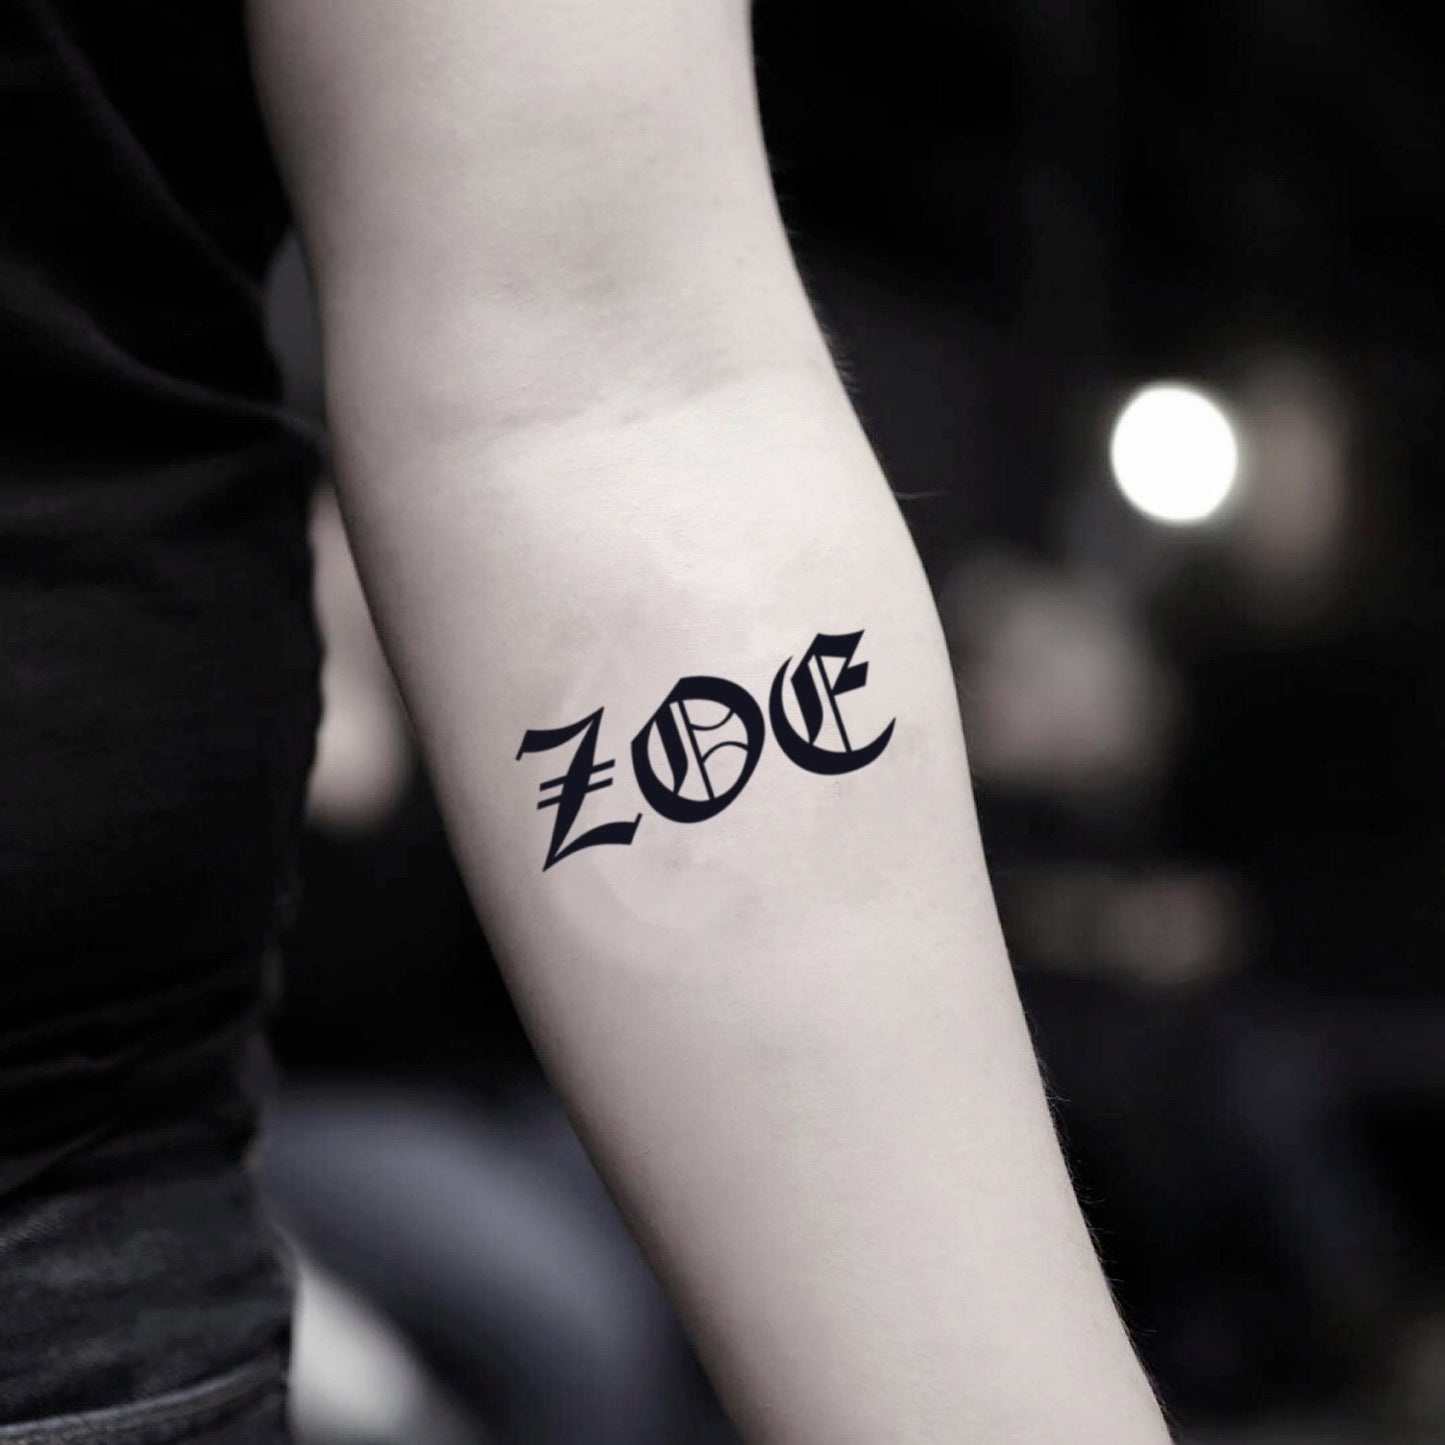 fake small zoe lettering temporary tattoo sticker design idea on inner arm